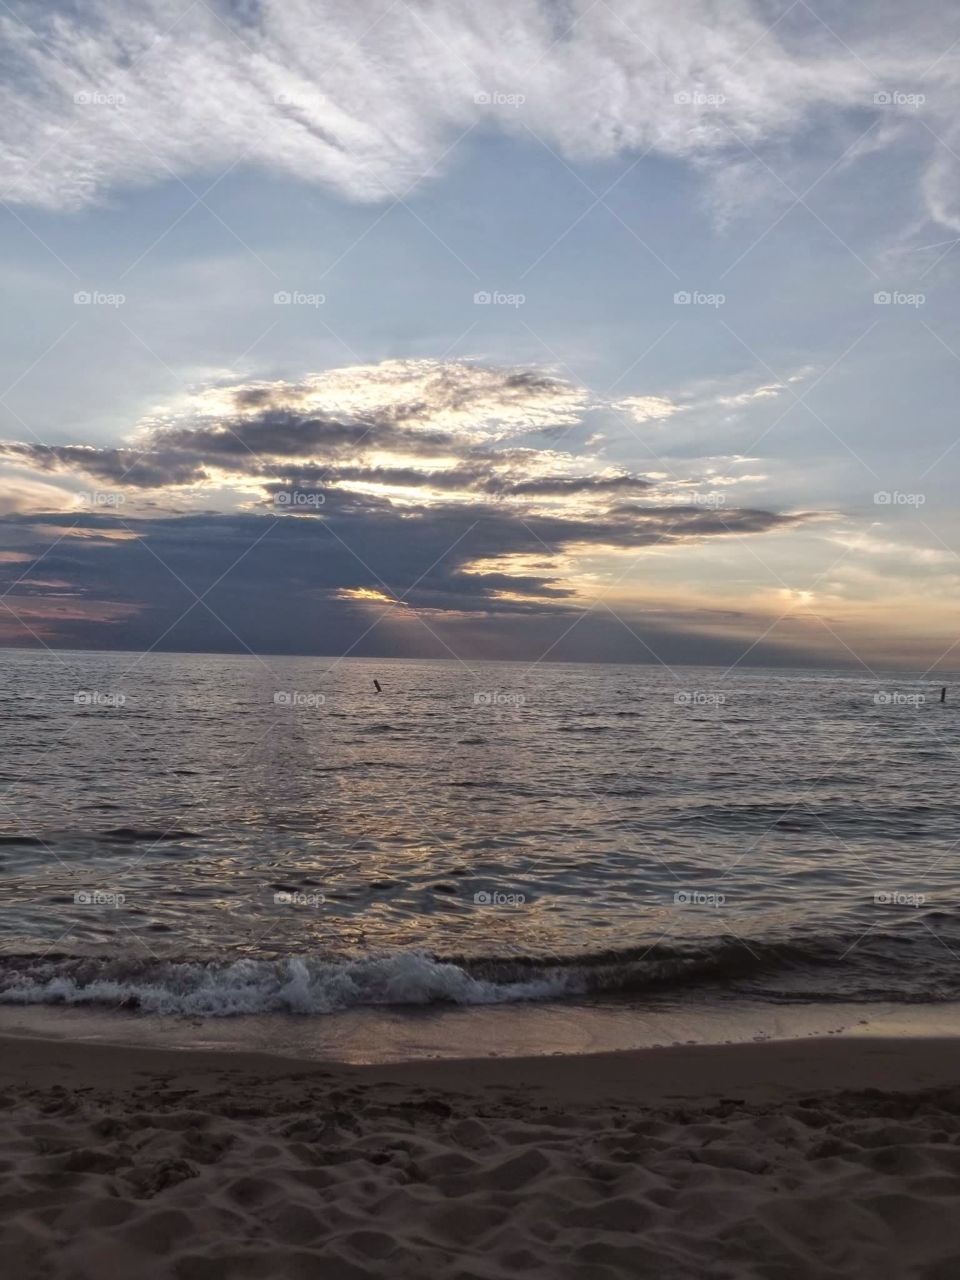 Water, Sea, Beach, Ocean, Sunset